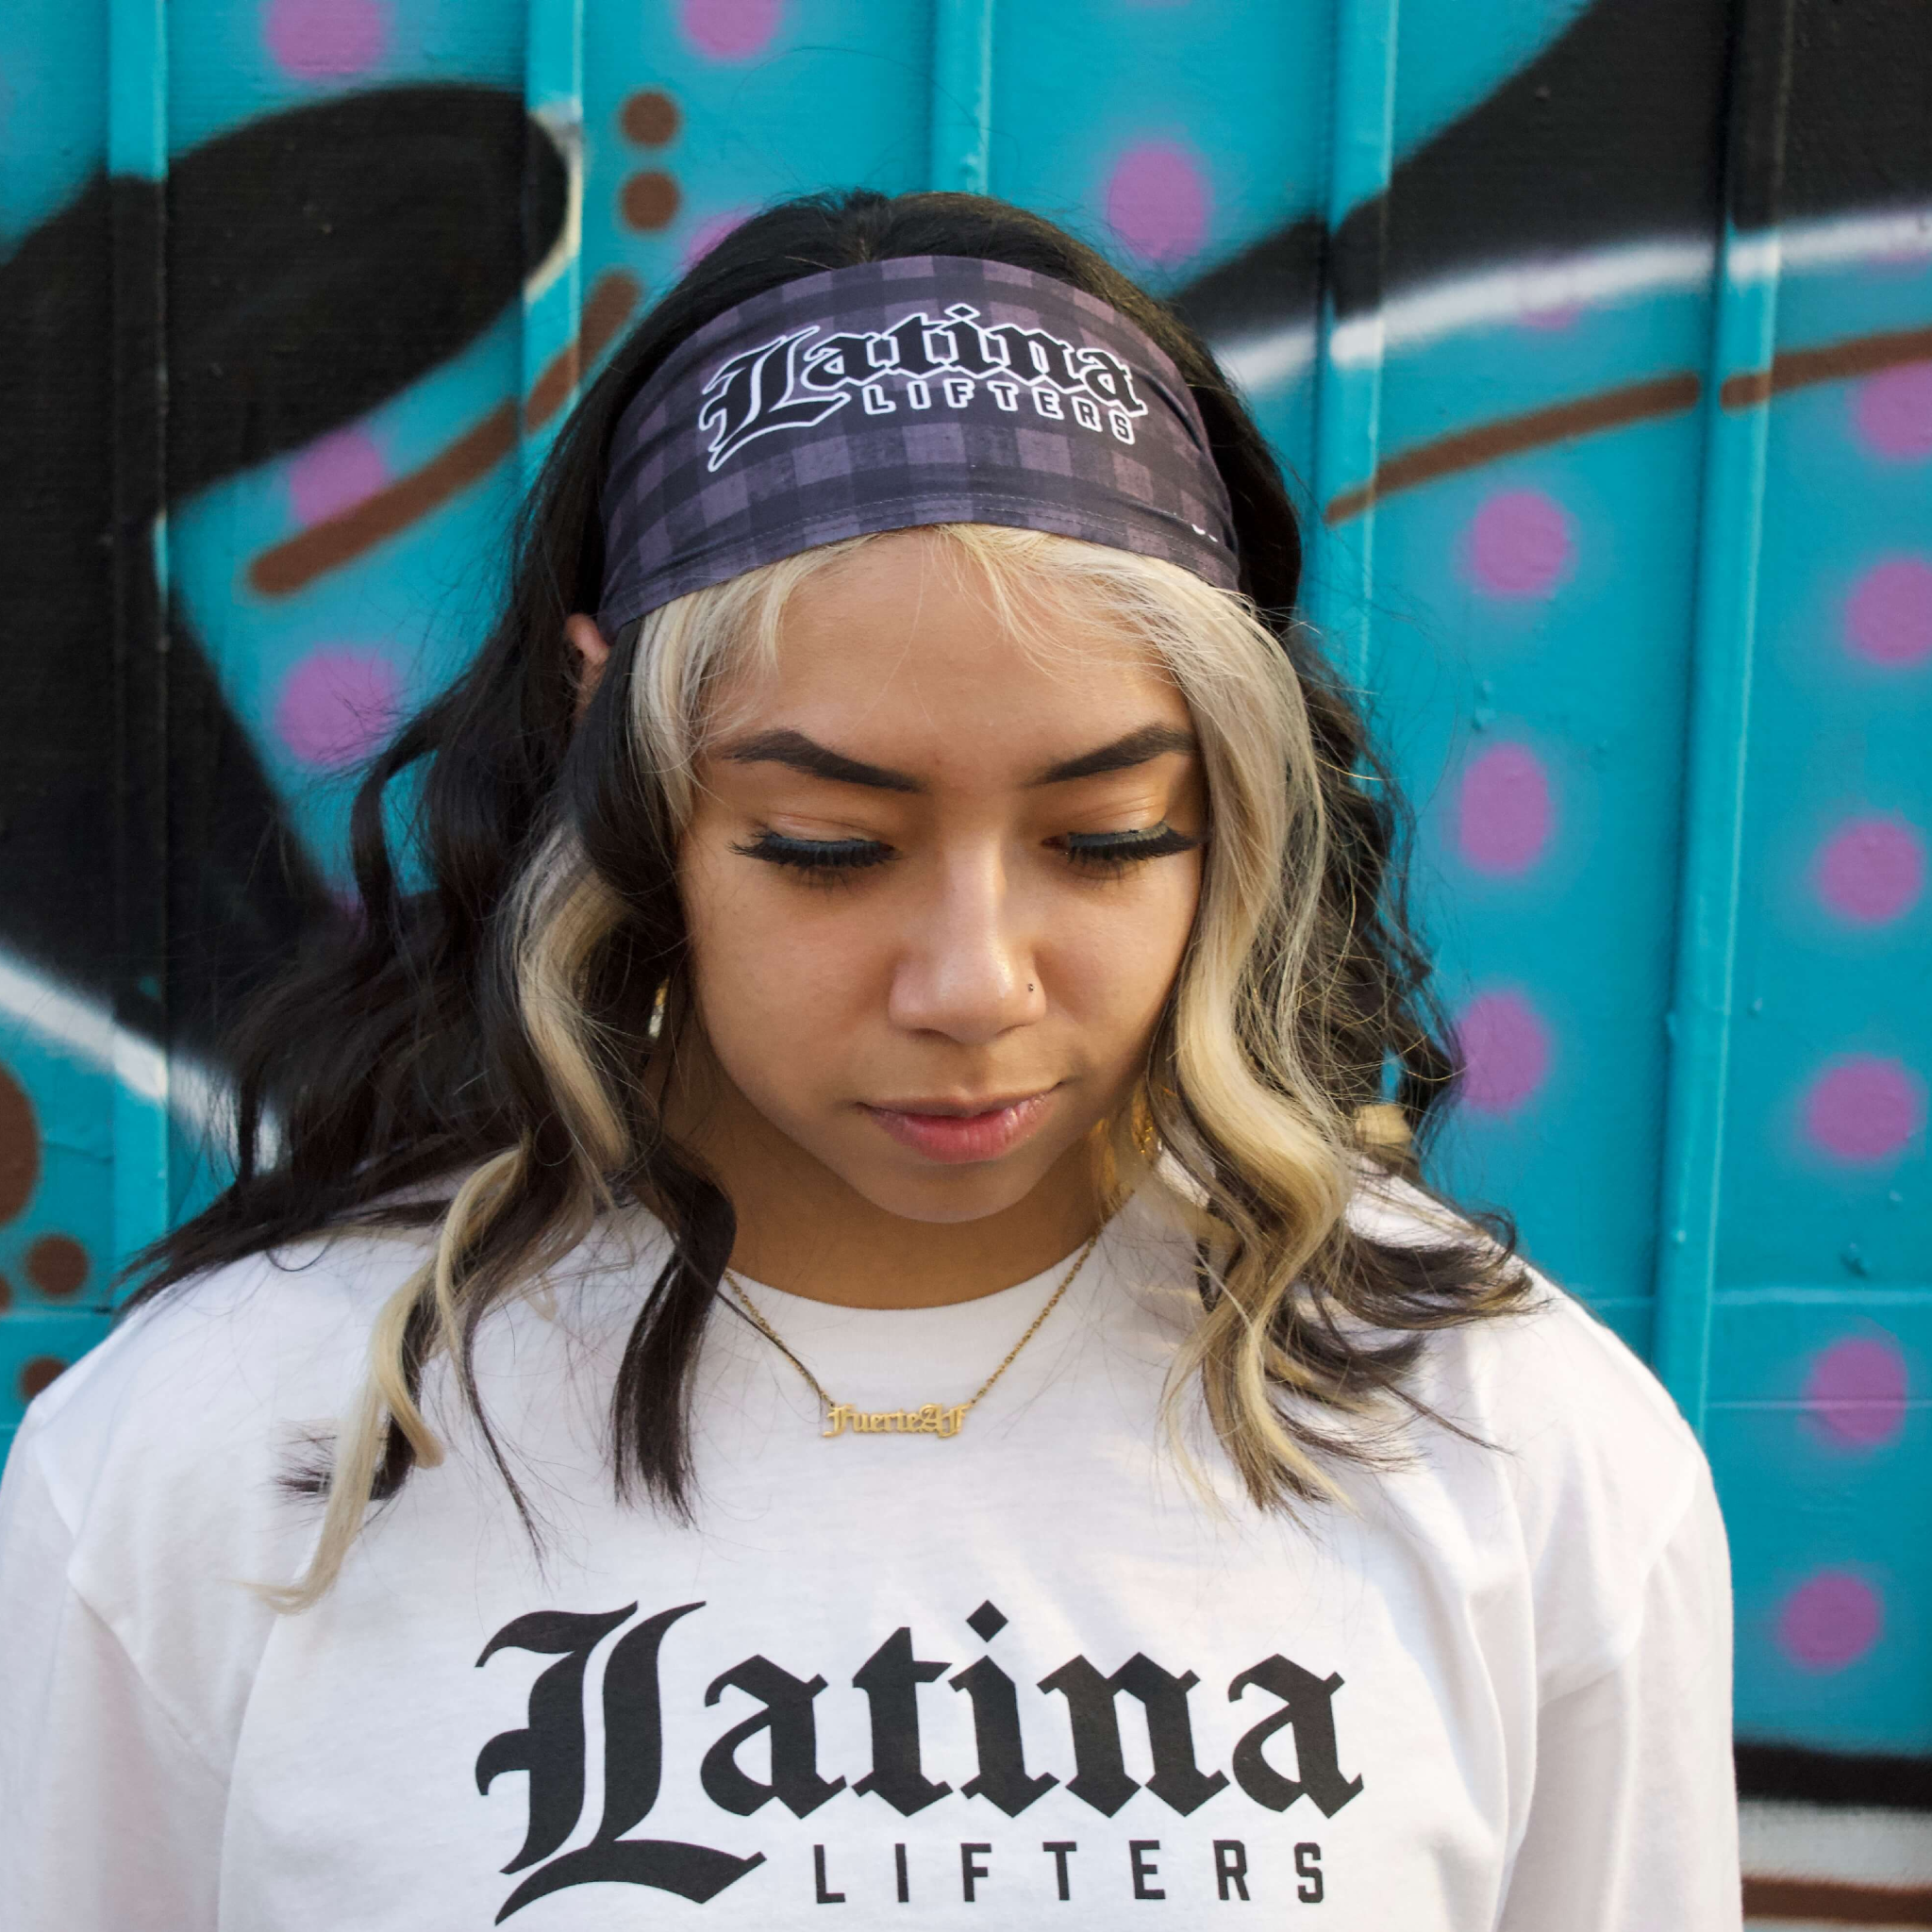 Noche headband by Junk - Latina Lifters